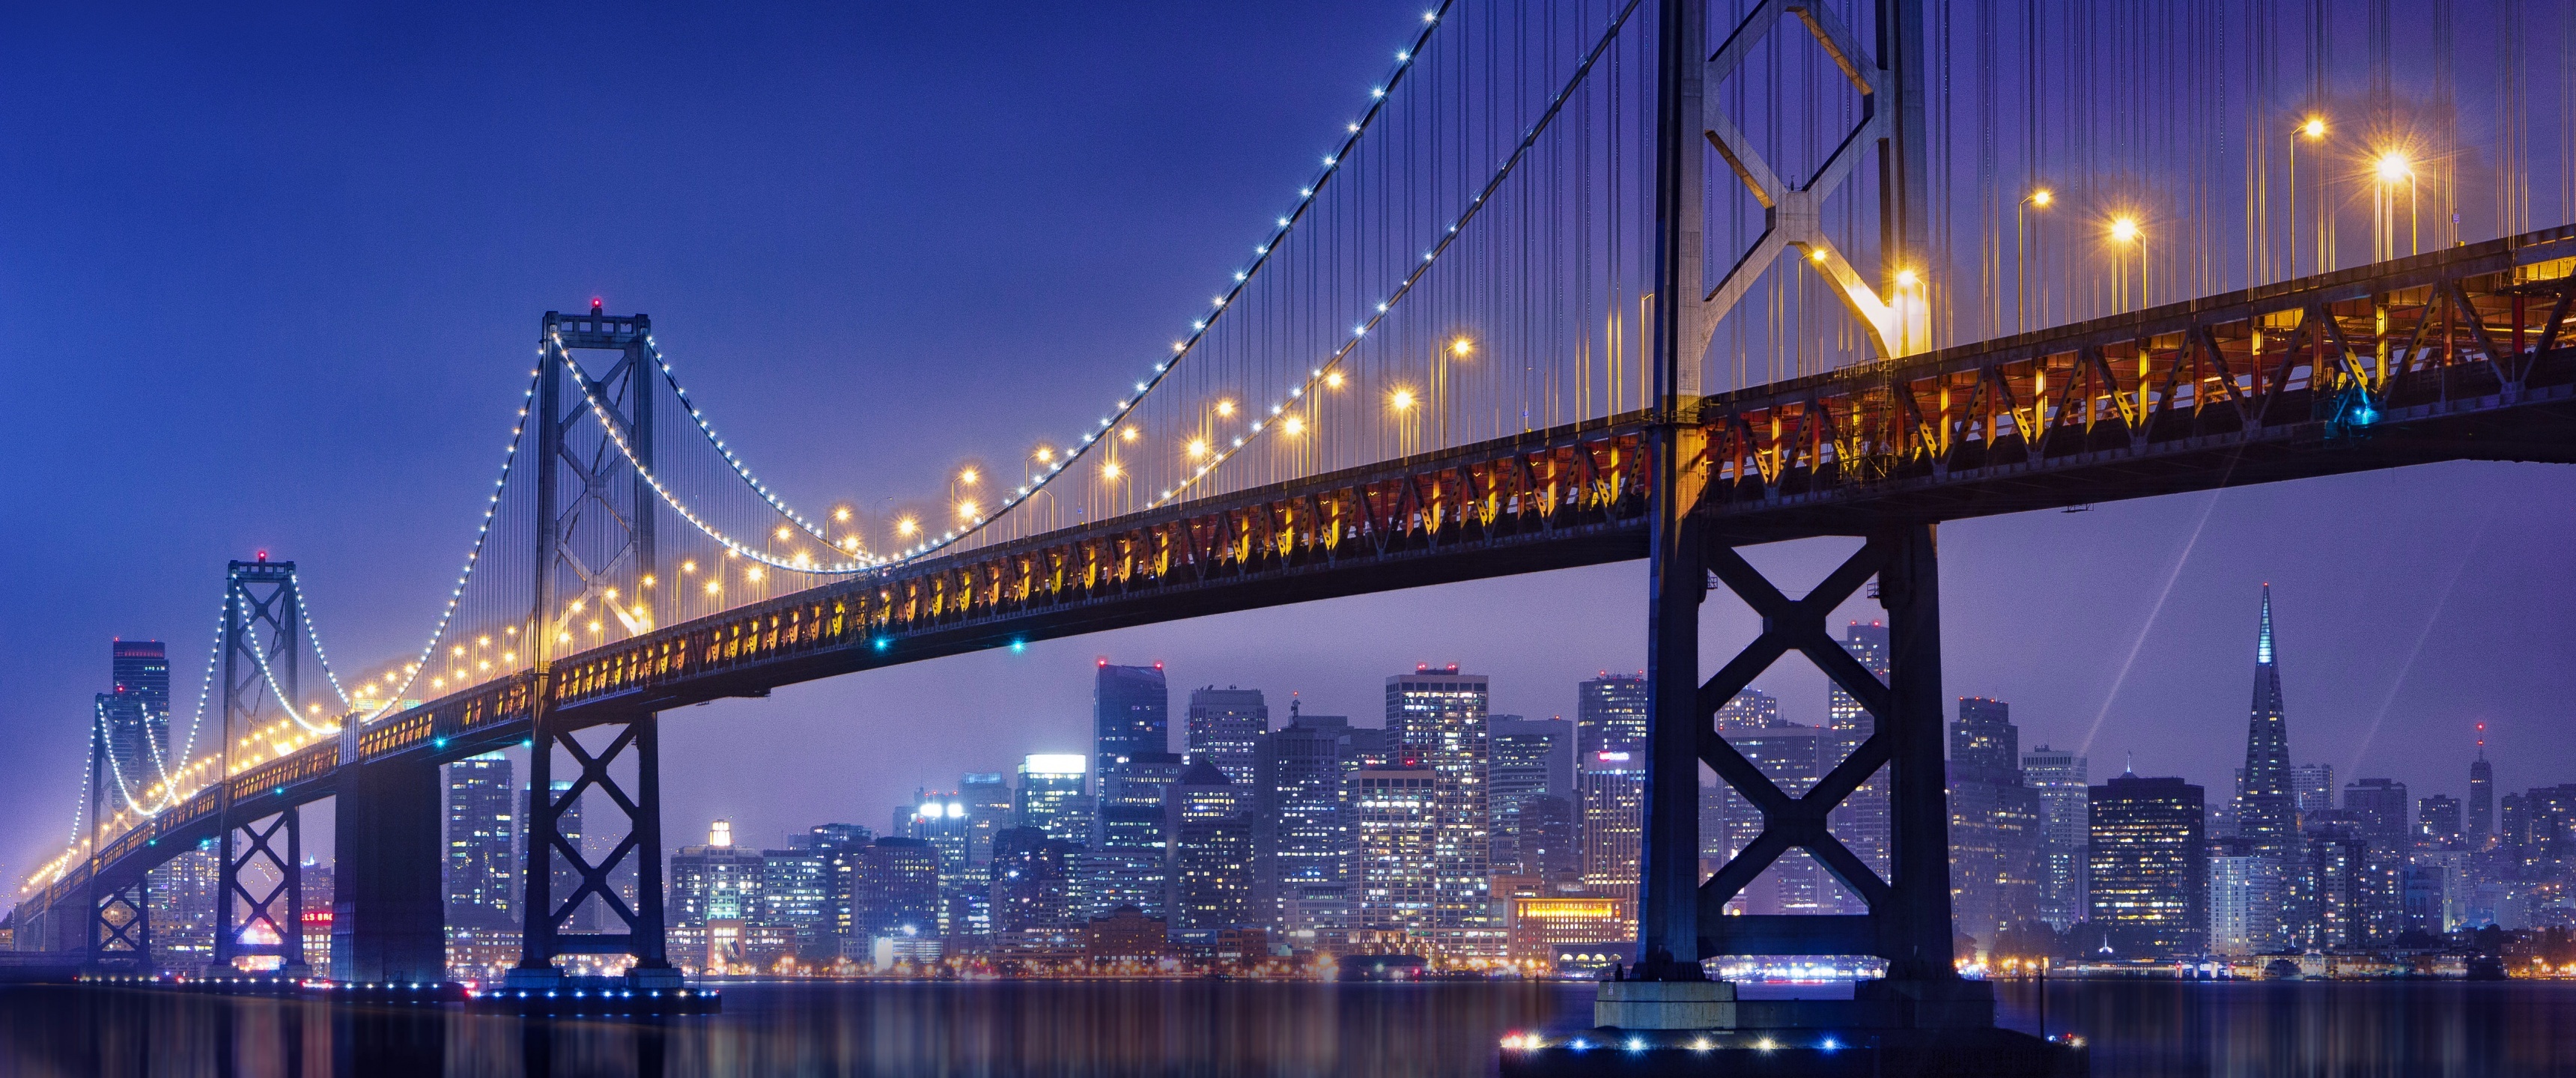 San Francisco: Bay Bridge, SF-Oakland, Night, City lights. 3440x1440 Dual Screen Wallpaper.